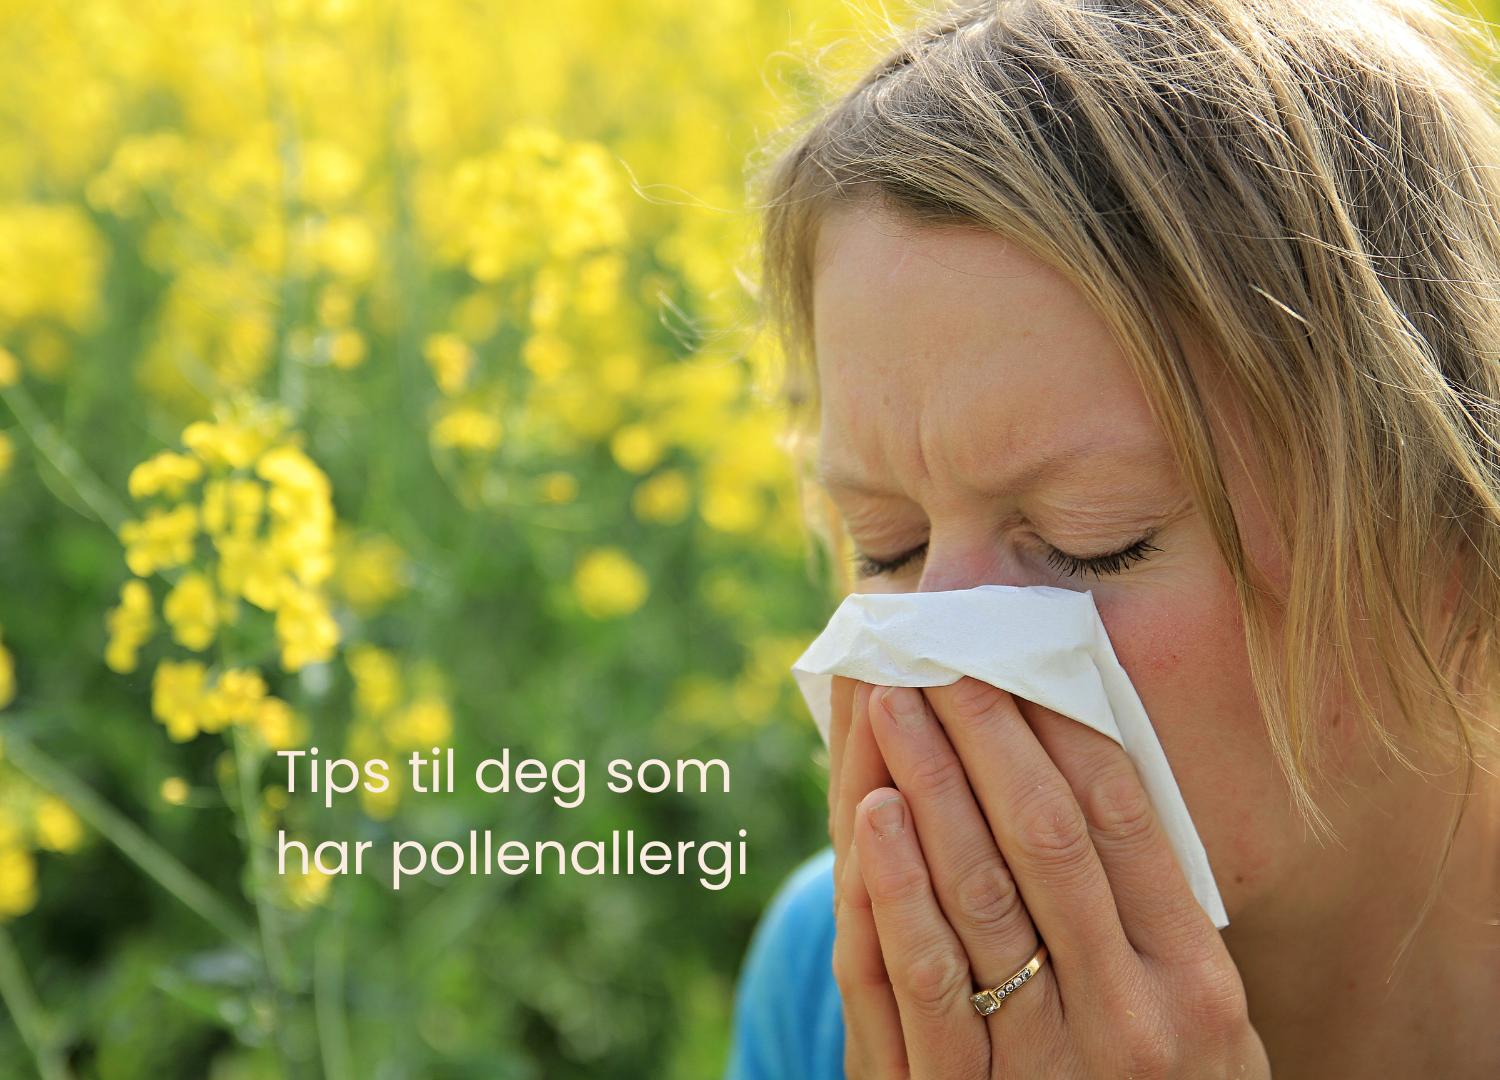 Pollenallergi og glaukom? Vær obs på dette! 